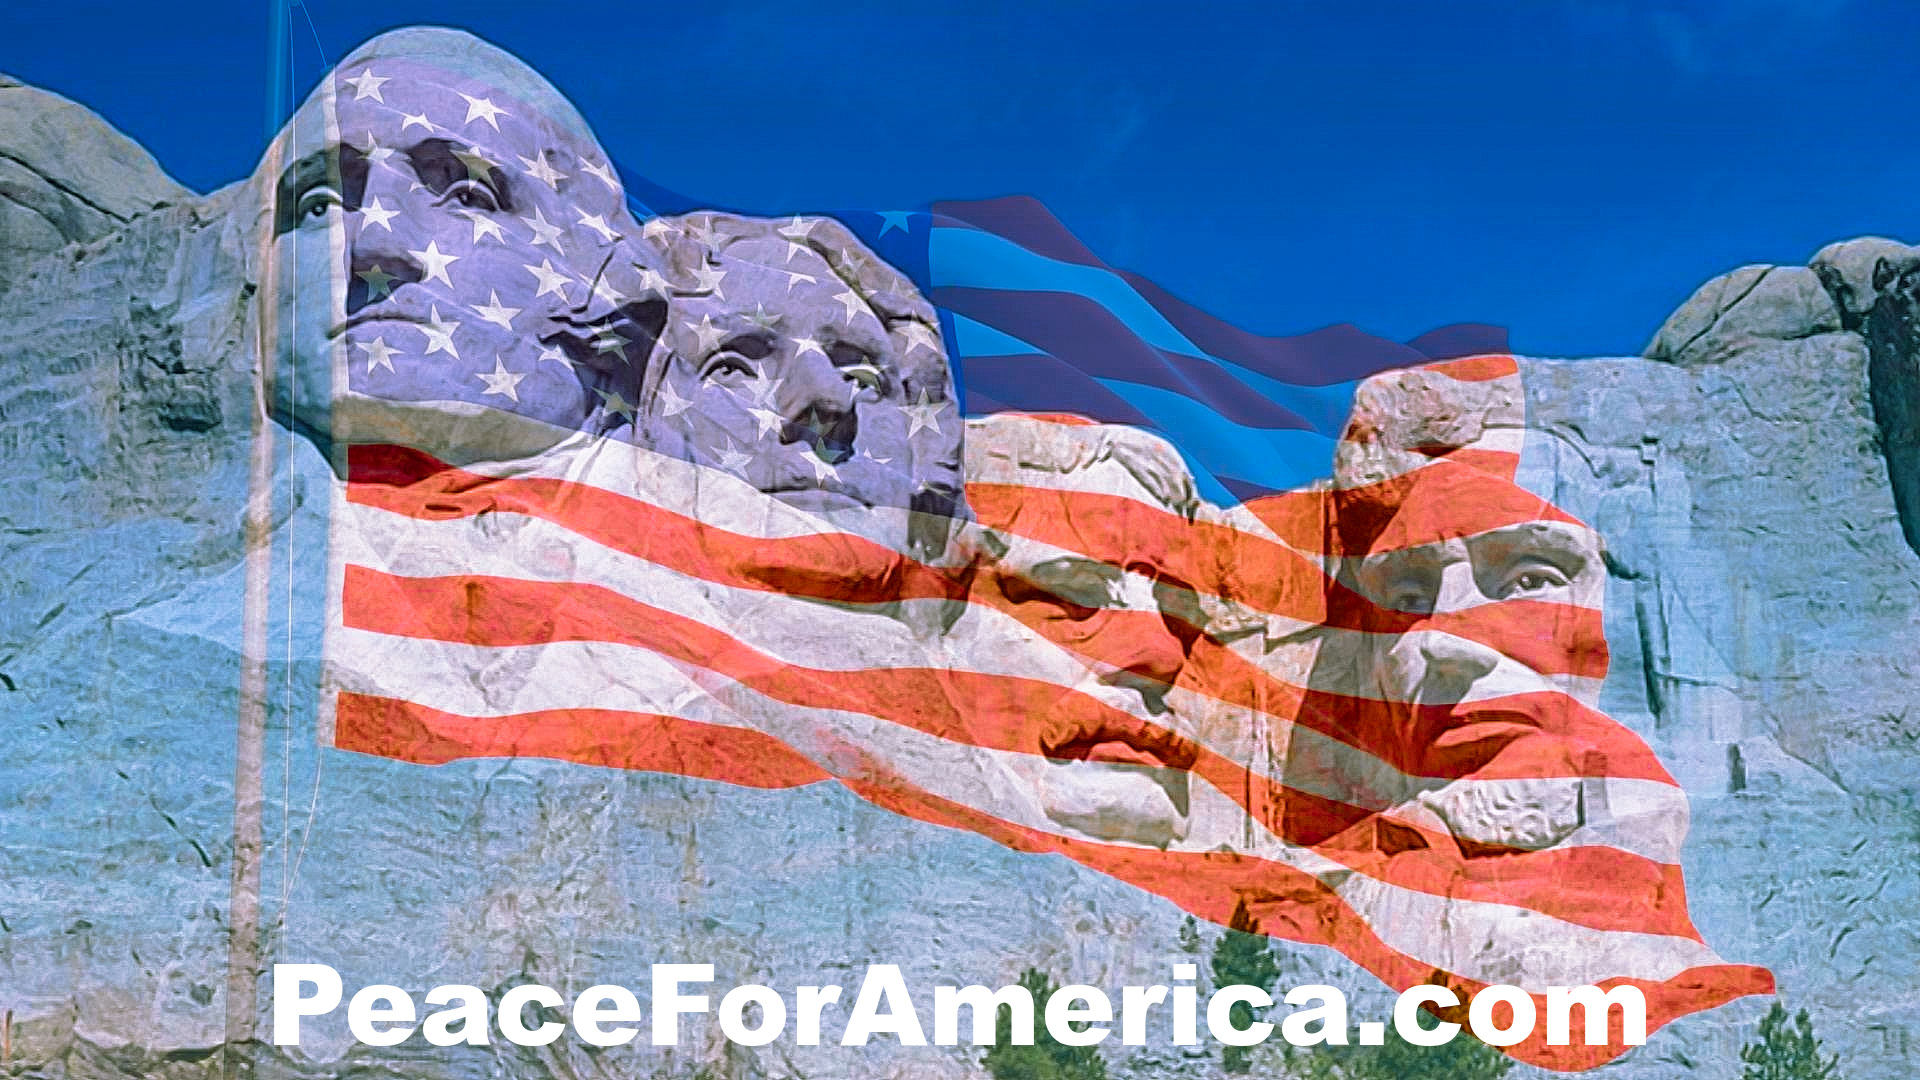 PeaceForAmerica.COM - may be for sale